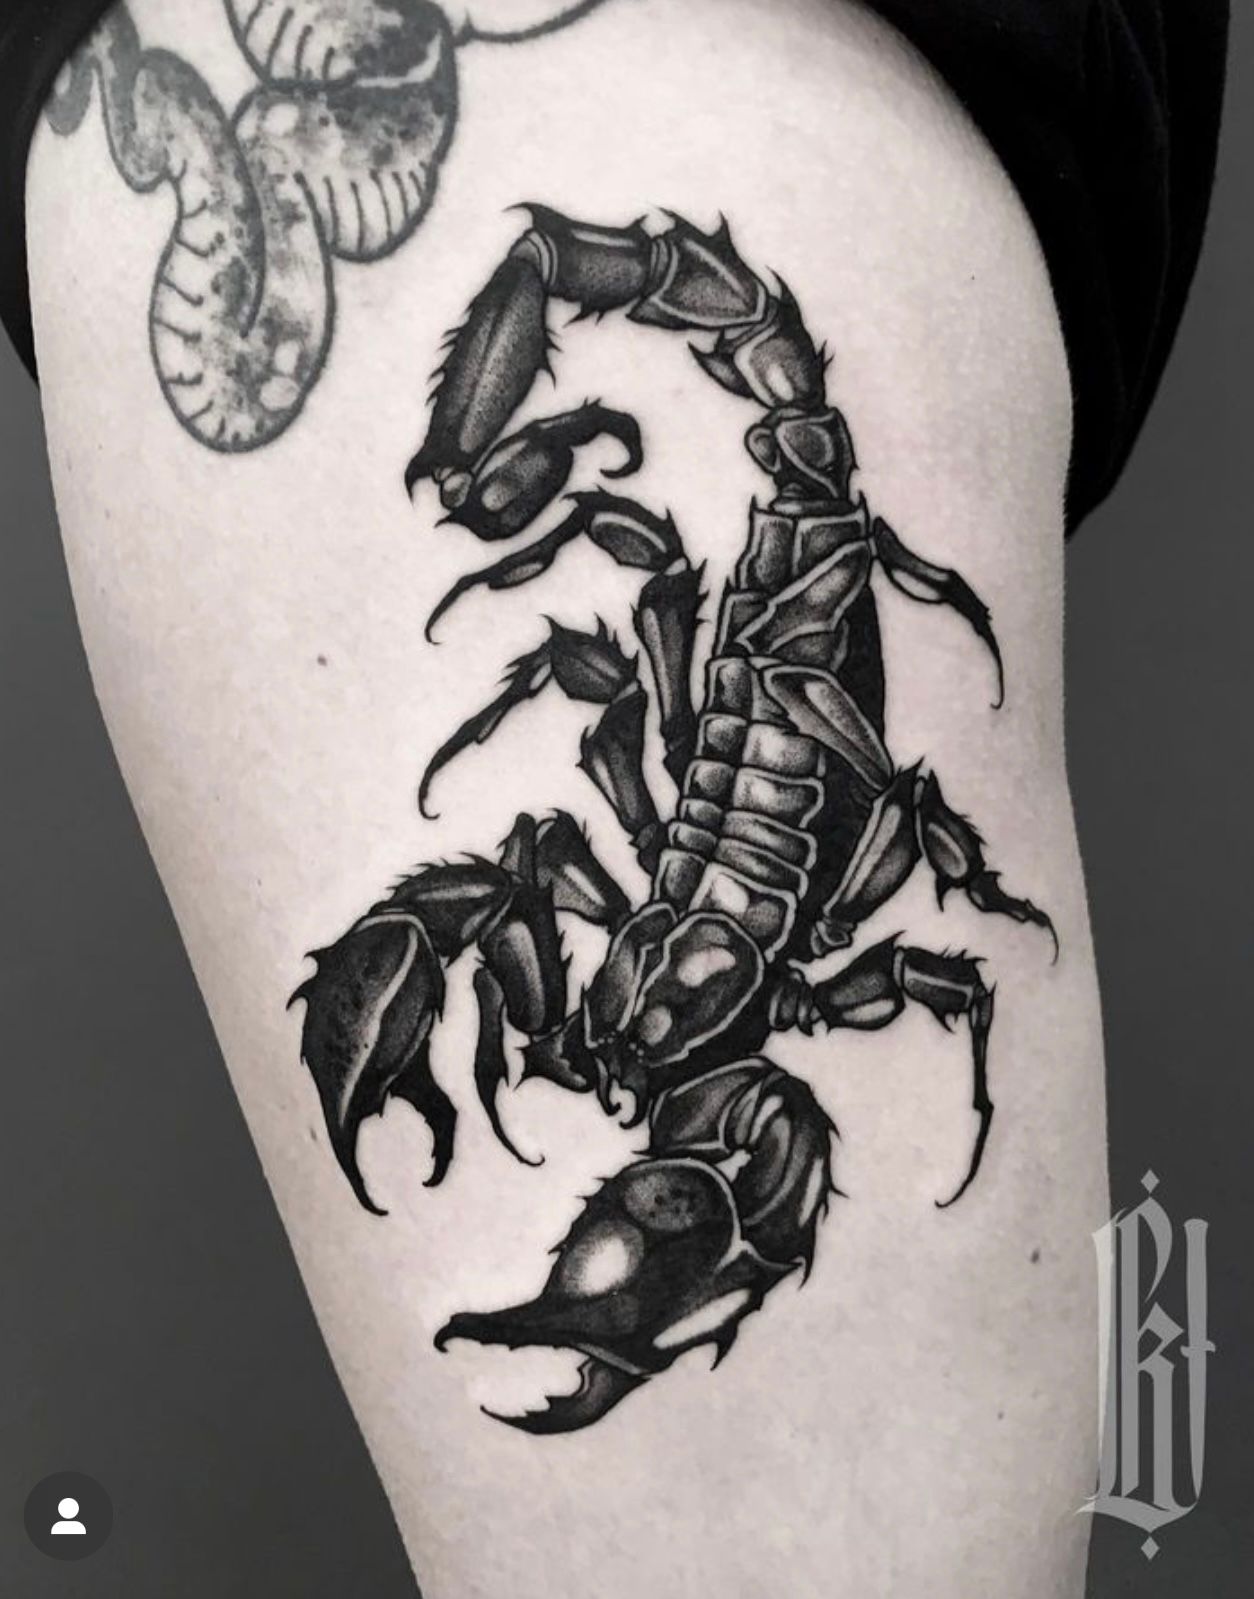 Tattoo uploaded by Ricardo Van 't Hof • Scorpion realistic • Tattoodo